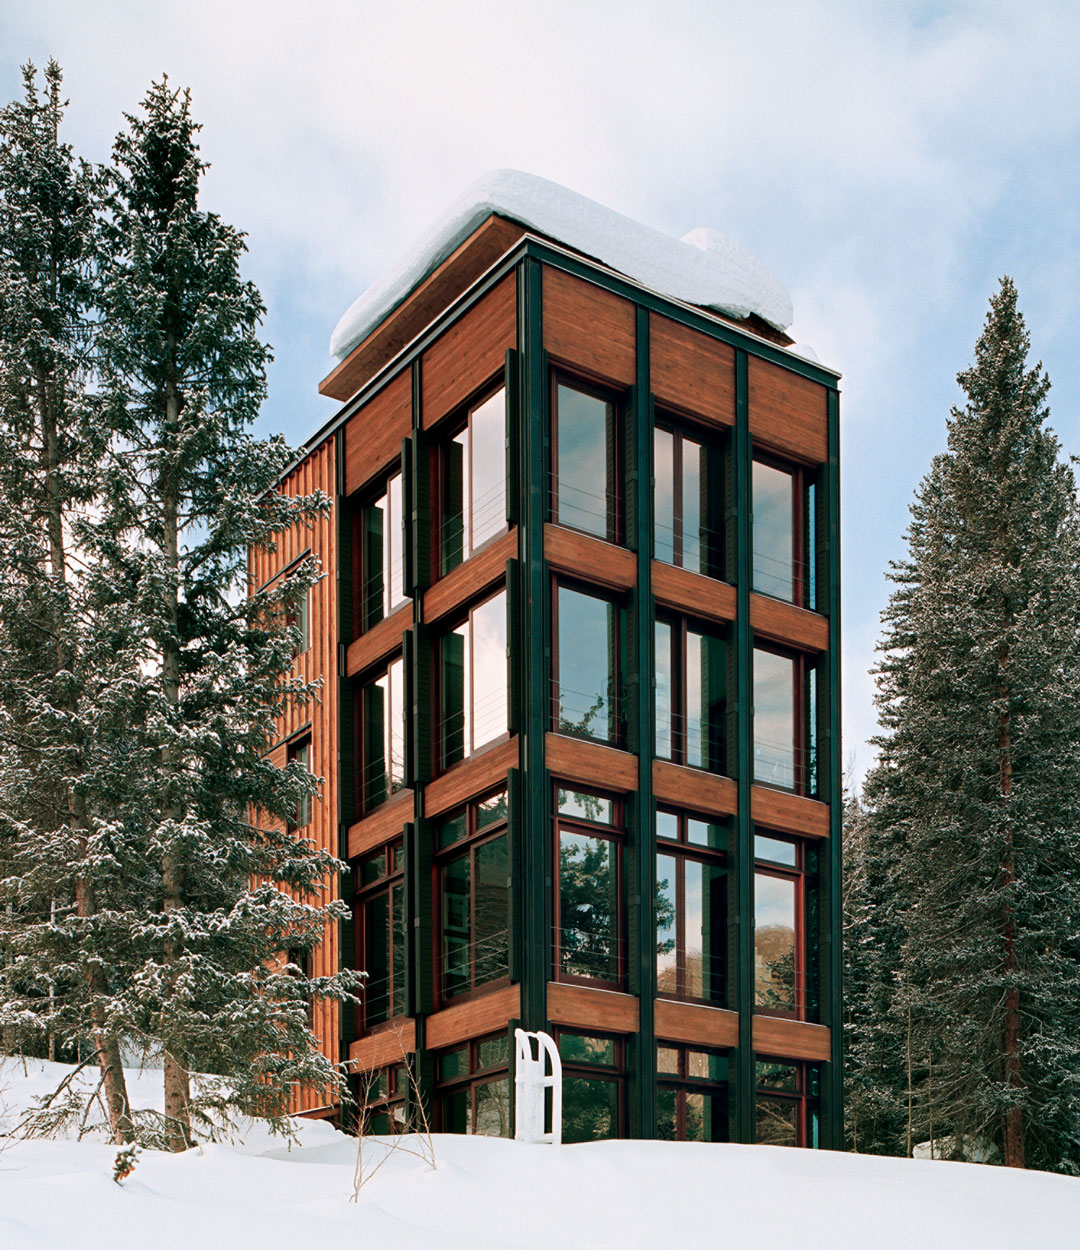 Annabelle Selldorf, Pika House, Dunton Springs, Colorado, USA, 2004. Photo by Thomas Loof. Courtesy of Selldorf Architects